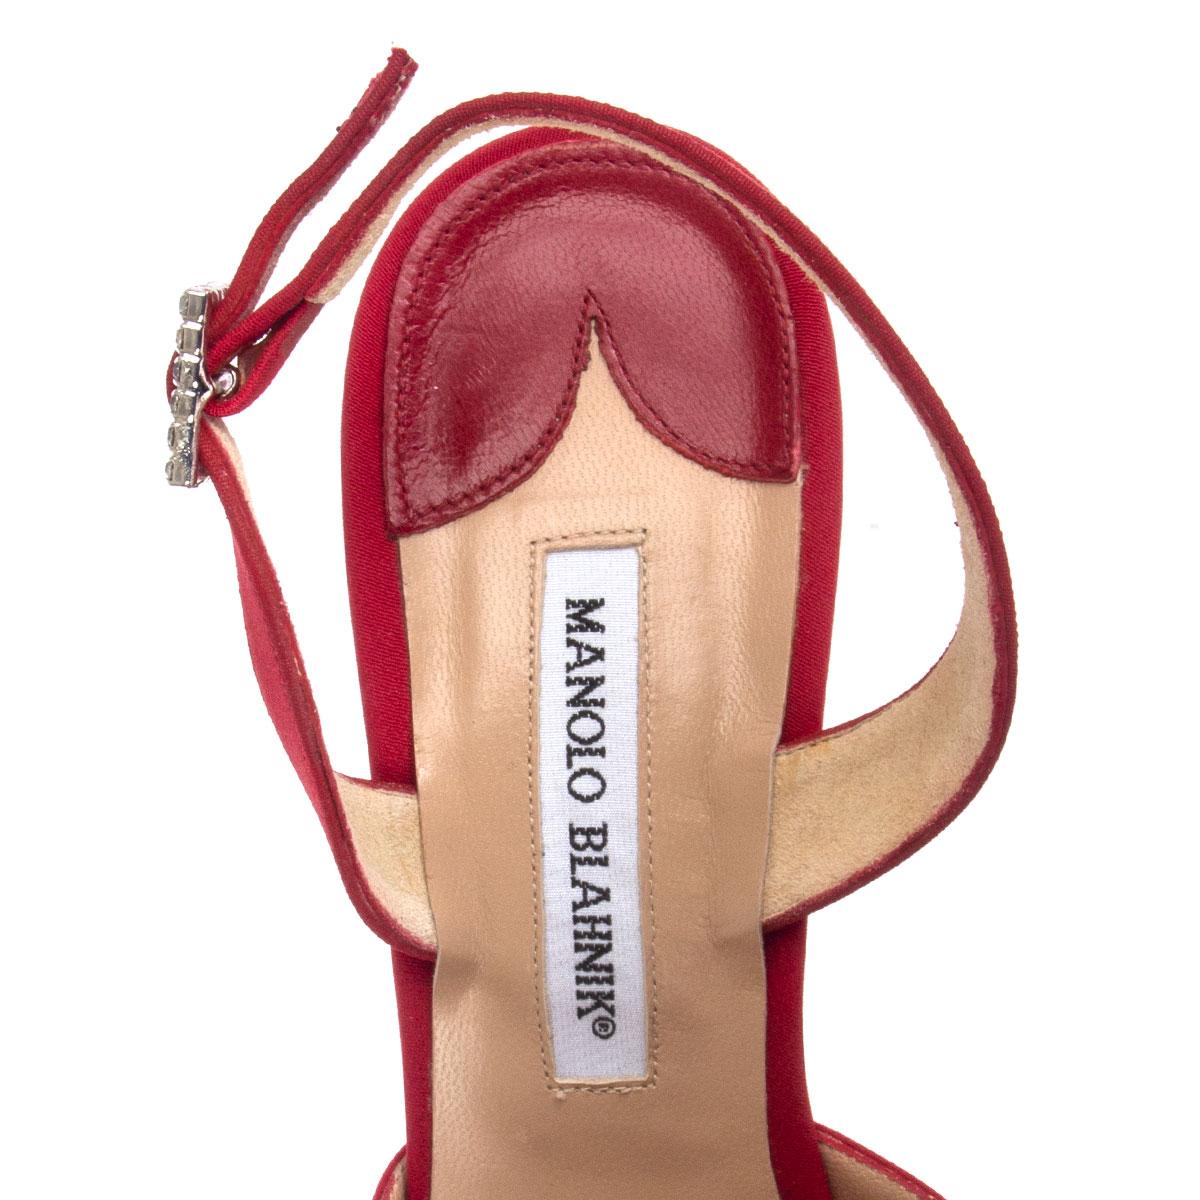 Red MANOLO BLAHNIK red silk CRYSTAL EMBELLISHED Sandals Shoes 38.5